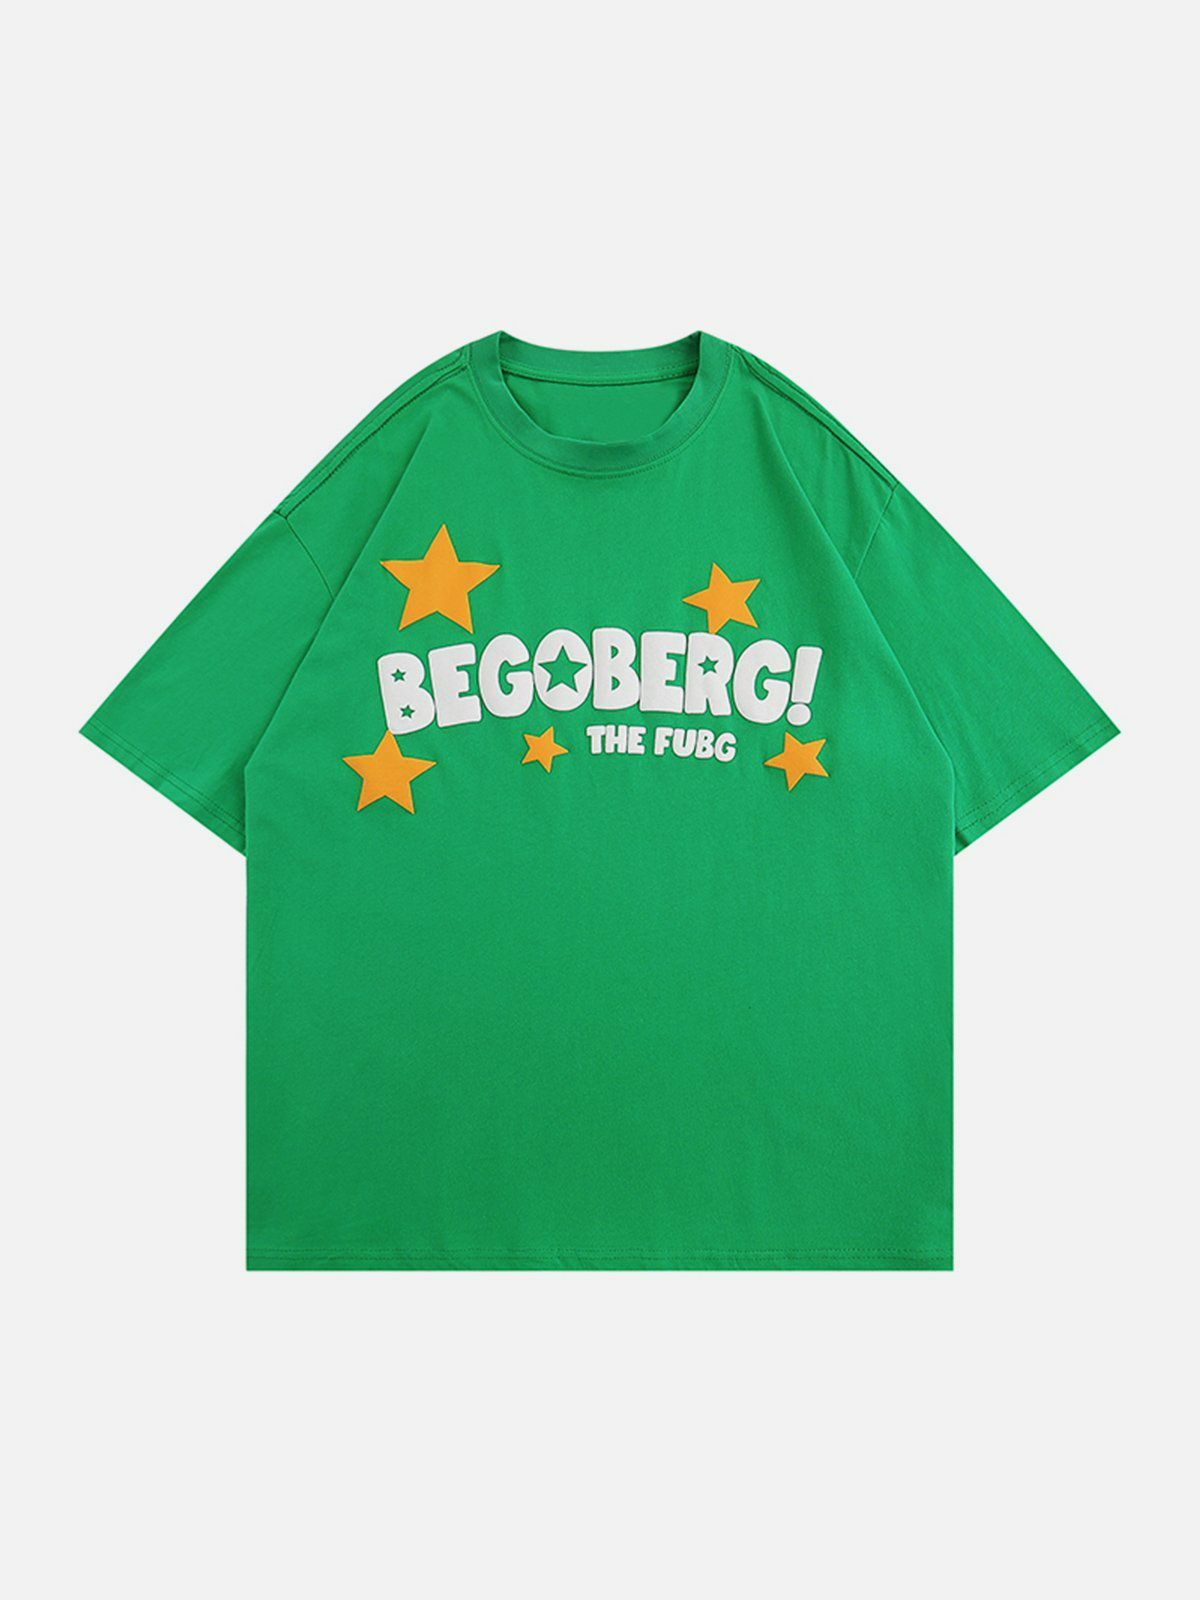 vibrant star print tee edgy  retro graphic shirt 3751